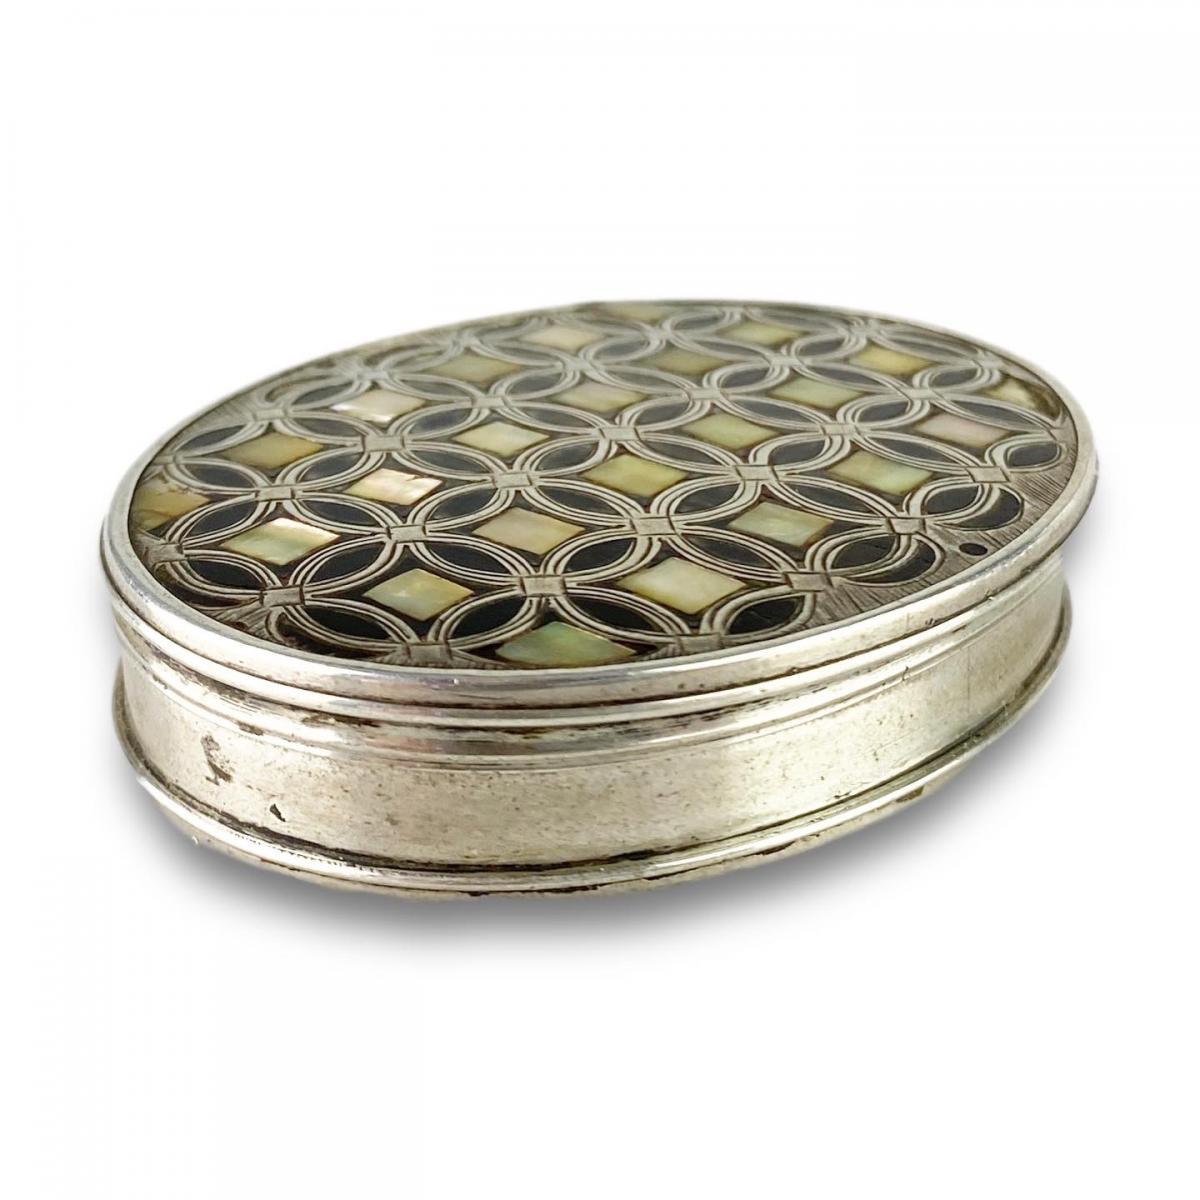 Silver mounted tortoiseshell & pearl snuff box. English, early 18th century